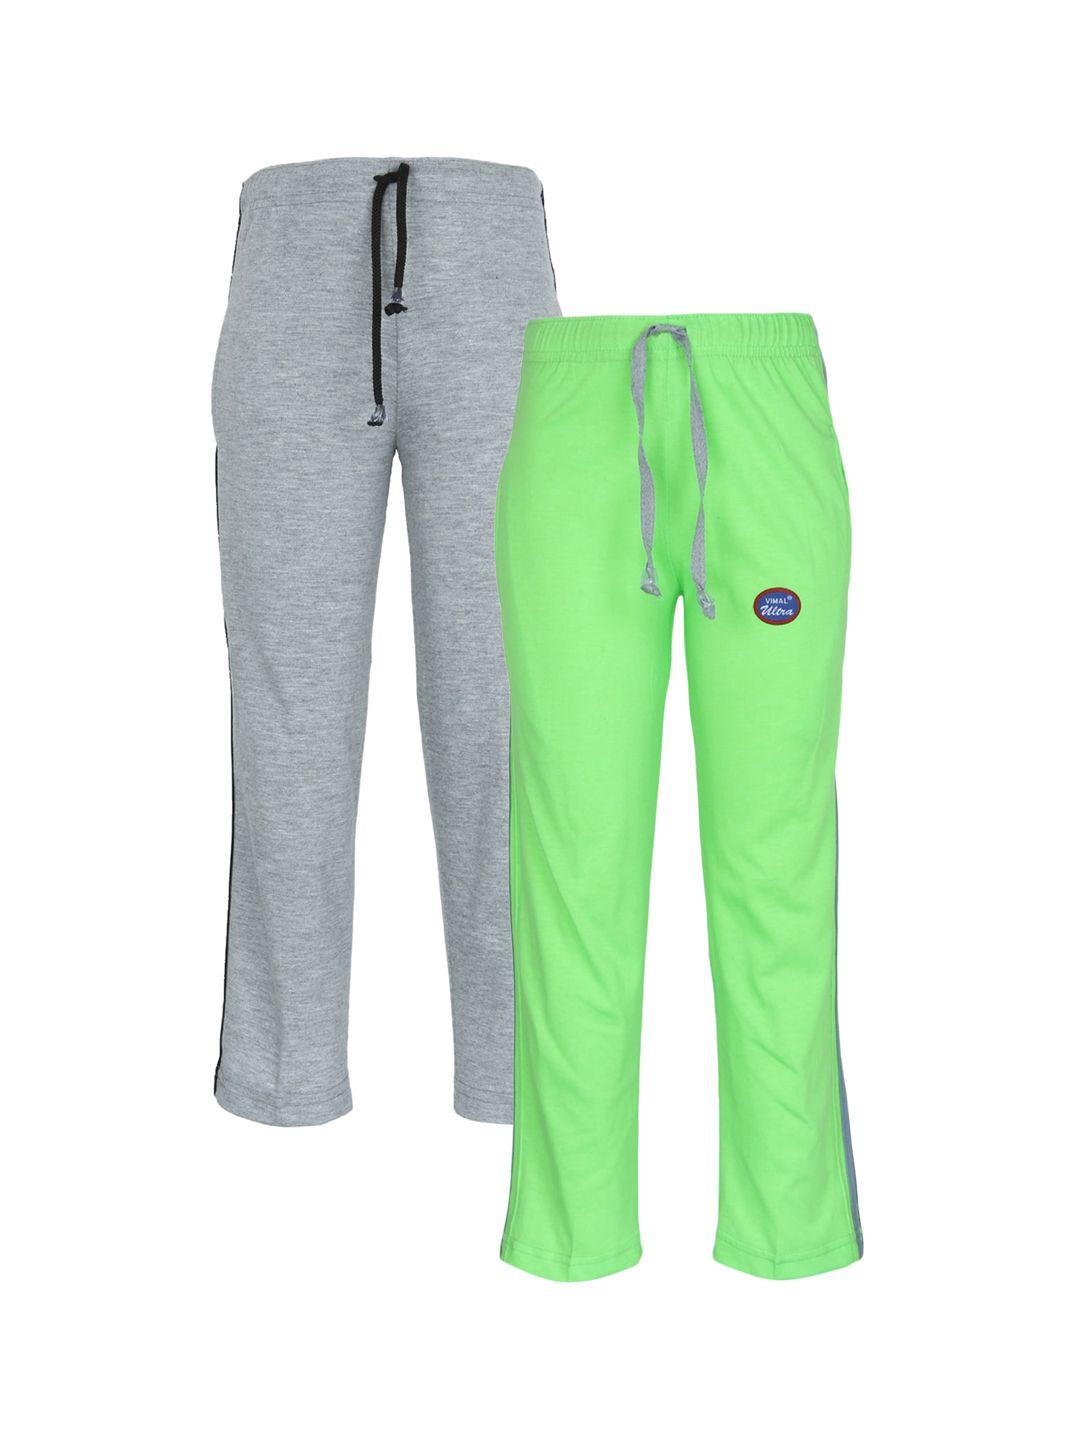 vimal jonney kids grey & green pack of 2 solid cotton track pants